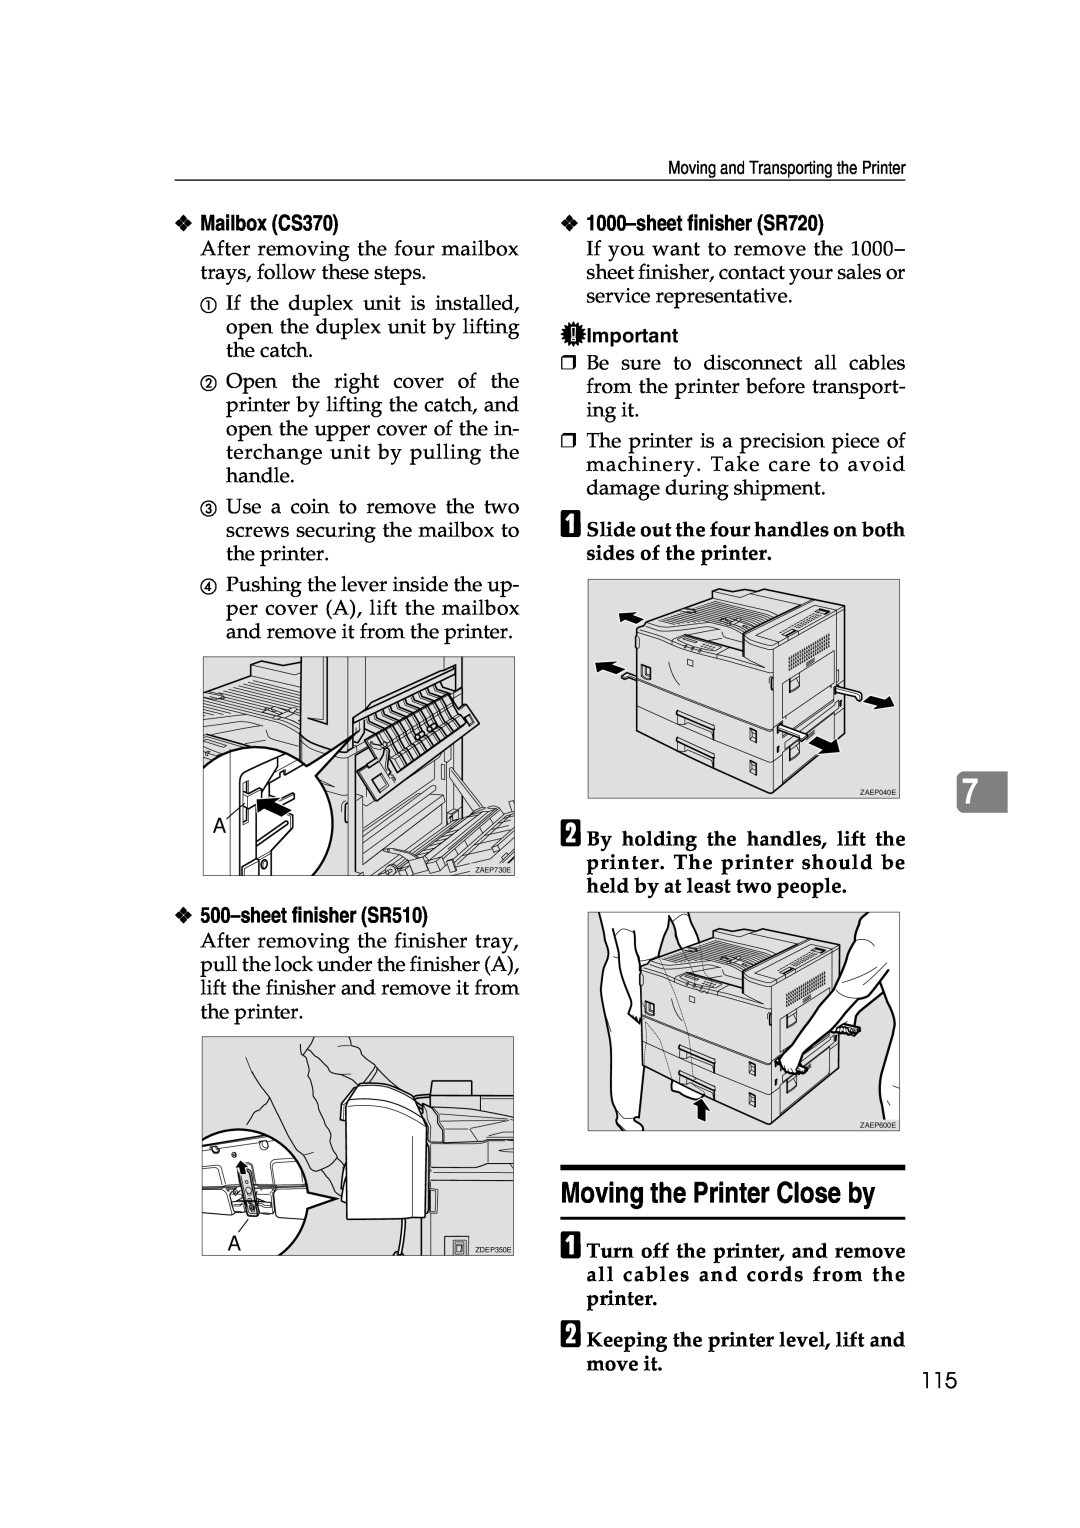 Lanier AP3200 manual Moving the Printer Close by, Mailbox CS370, 500–sheetfinisher SR510, 1000–sheetfinisher SR720 